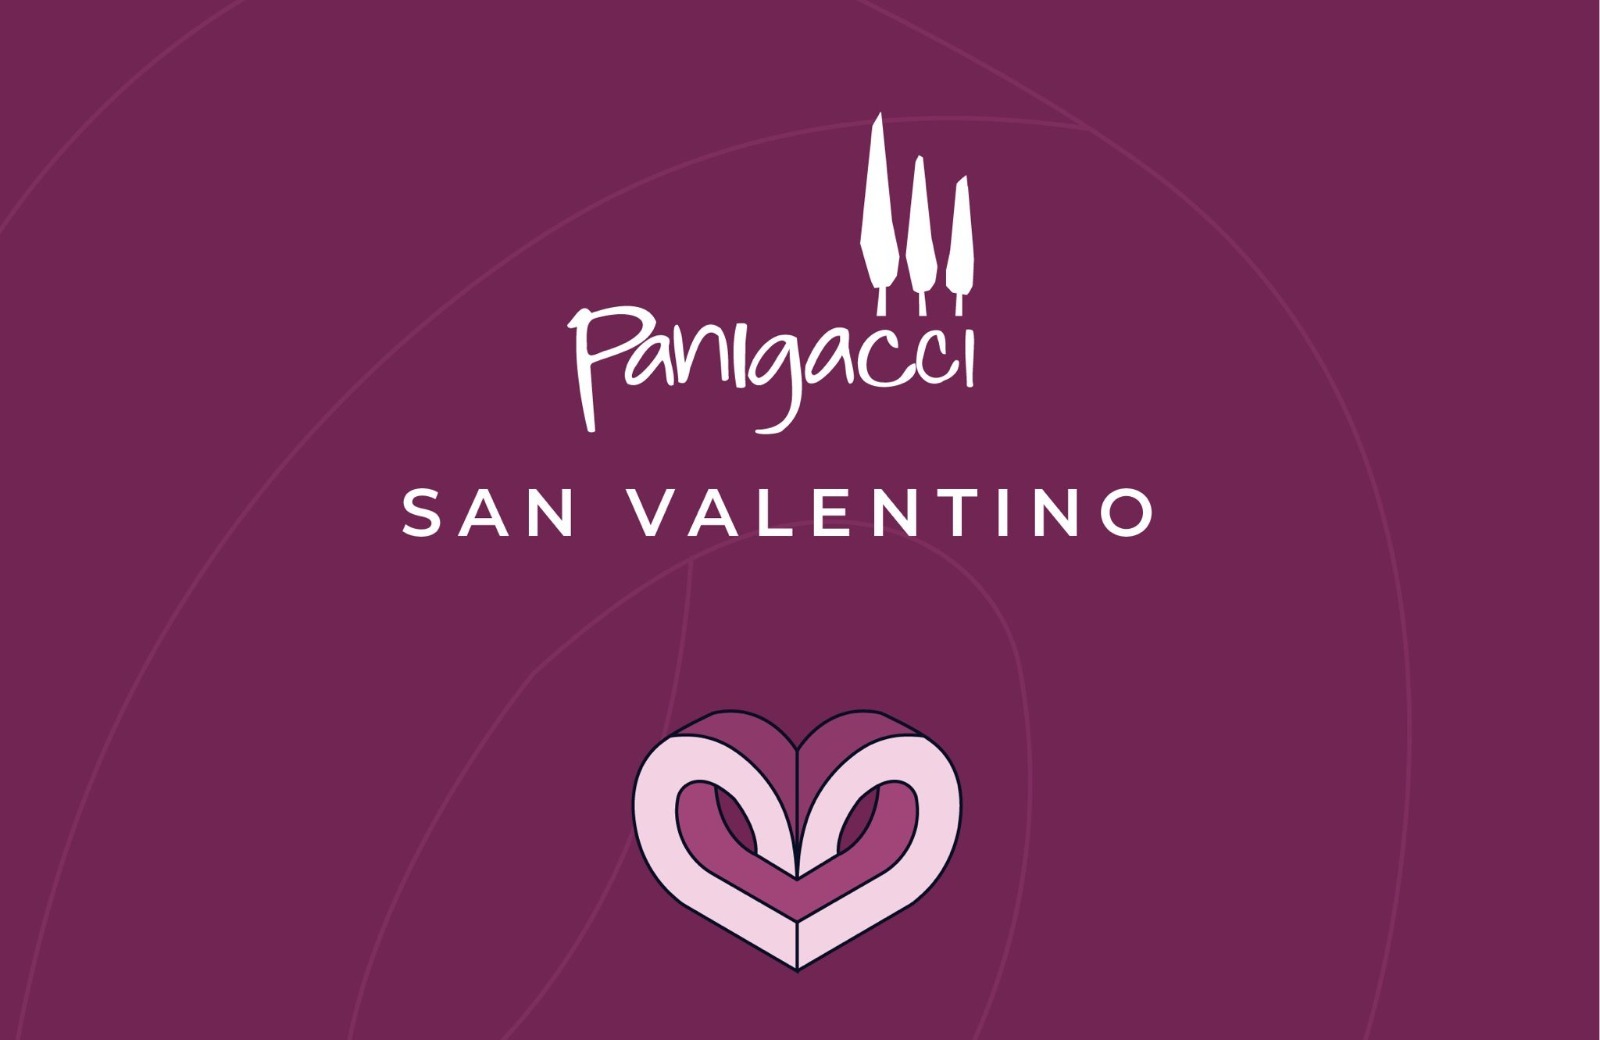 cena San Valentino Panigacci Milano Bistrot 3282345620